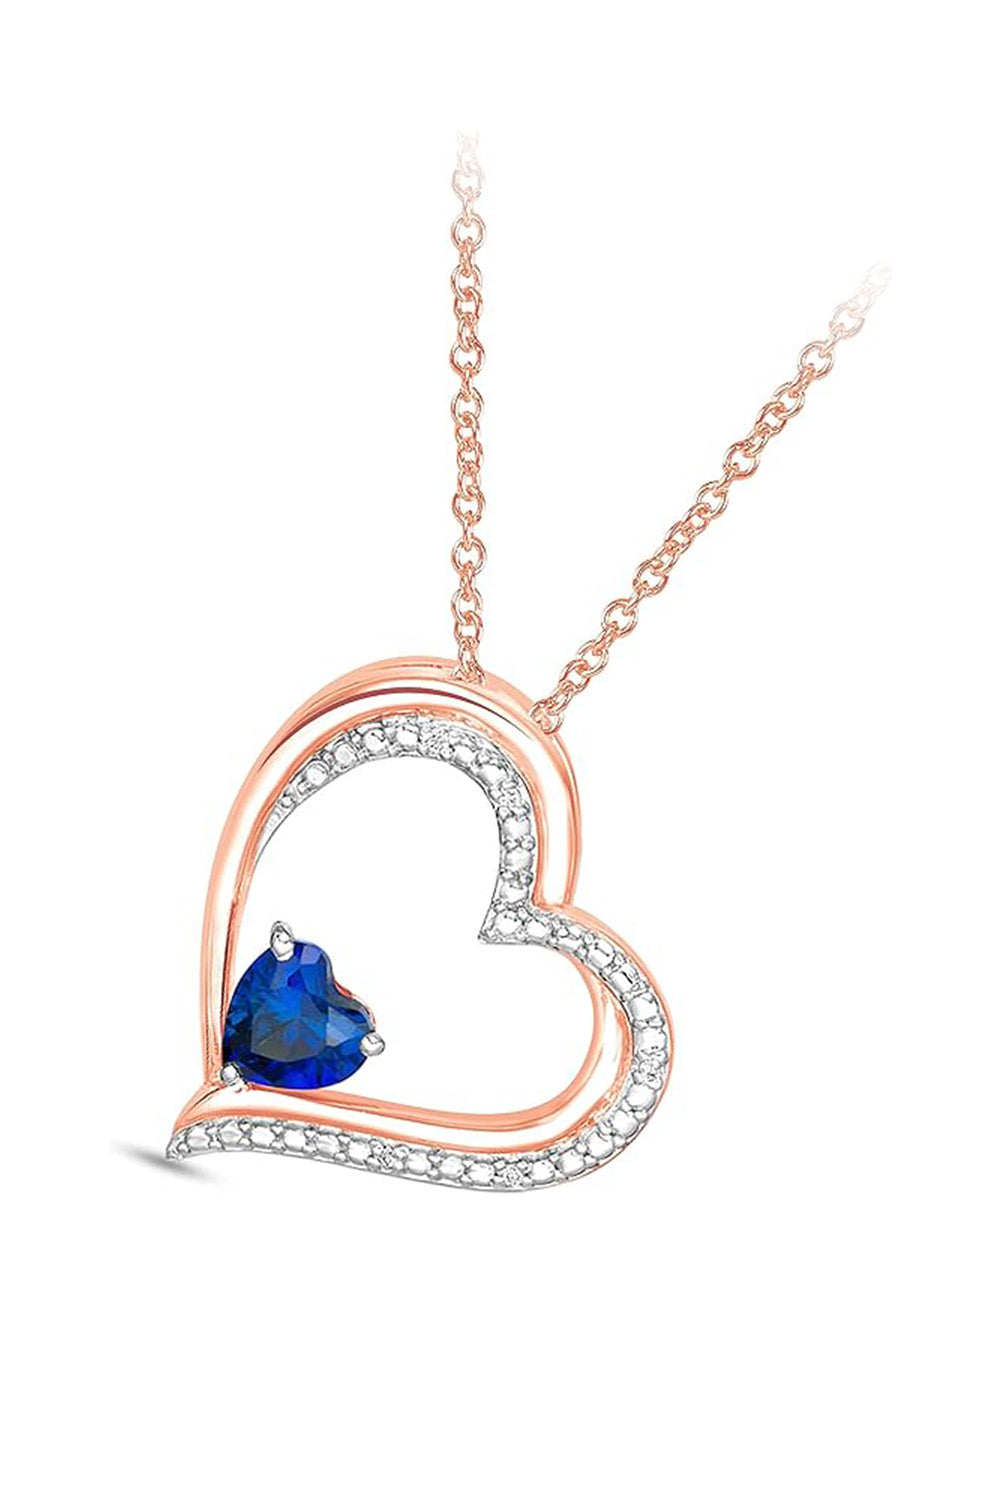 Rose Gold Color Sapphire Heart Pendant Necklace